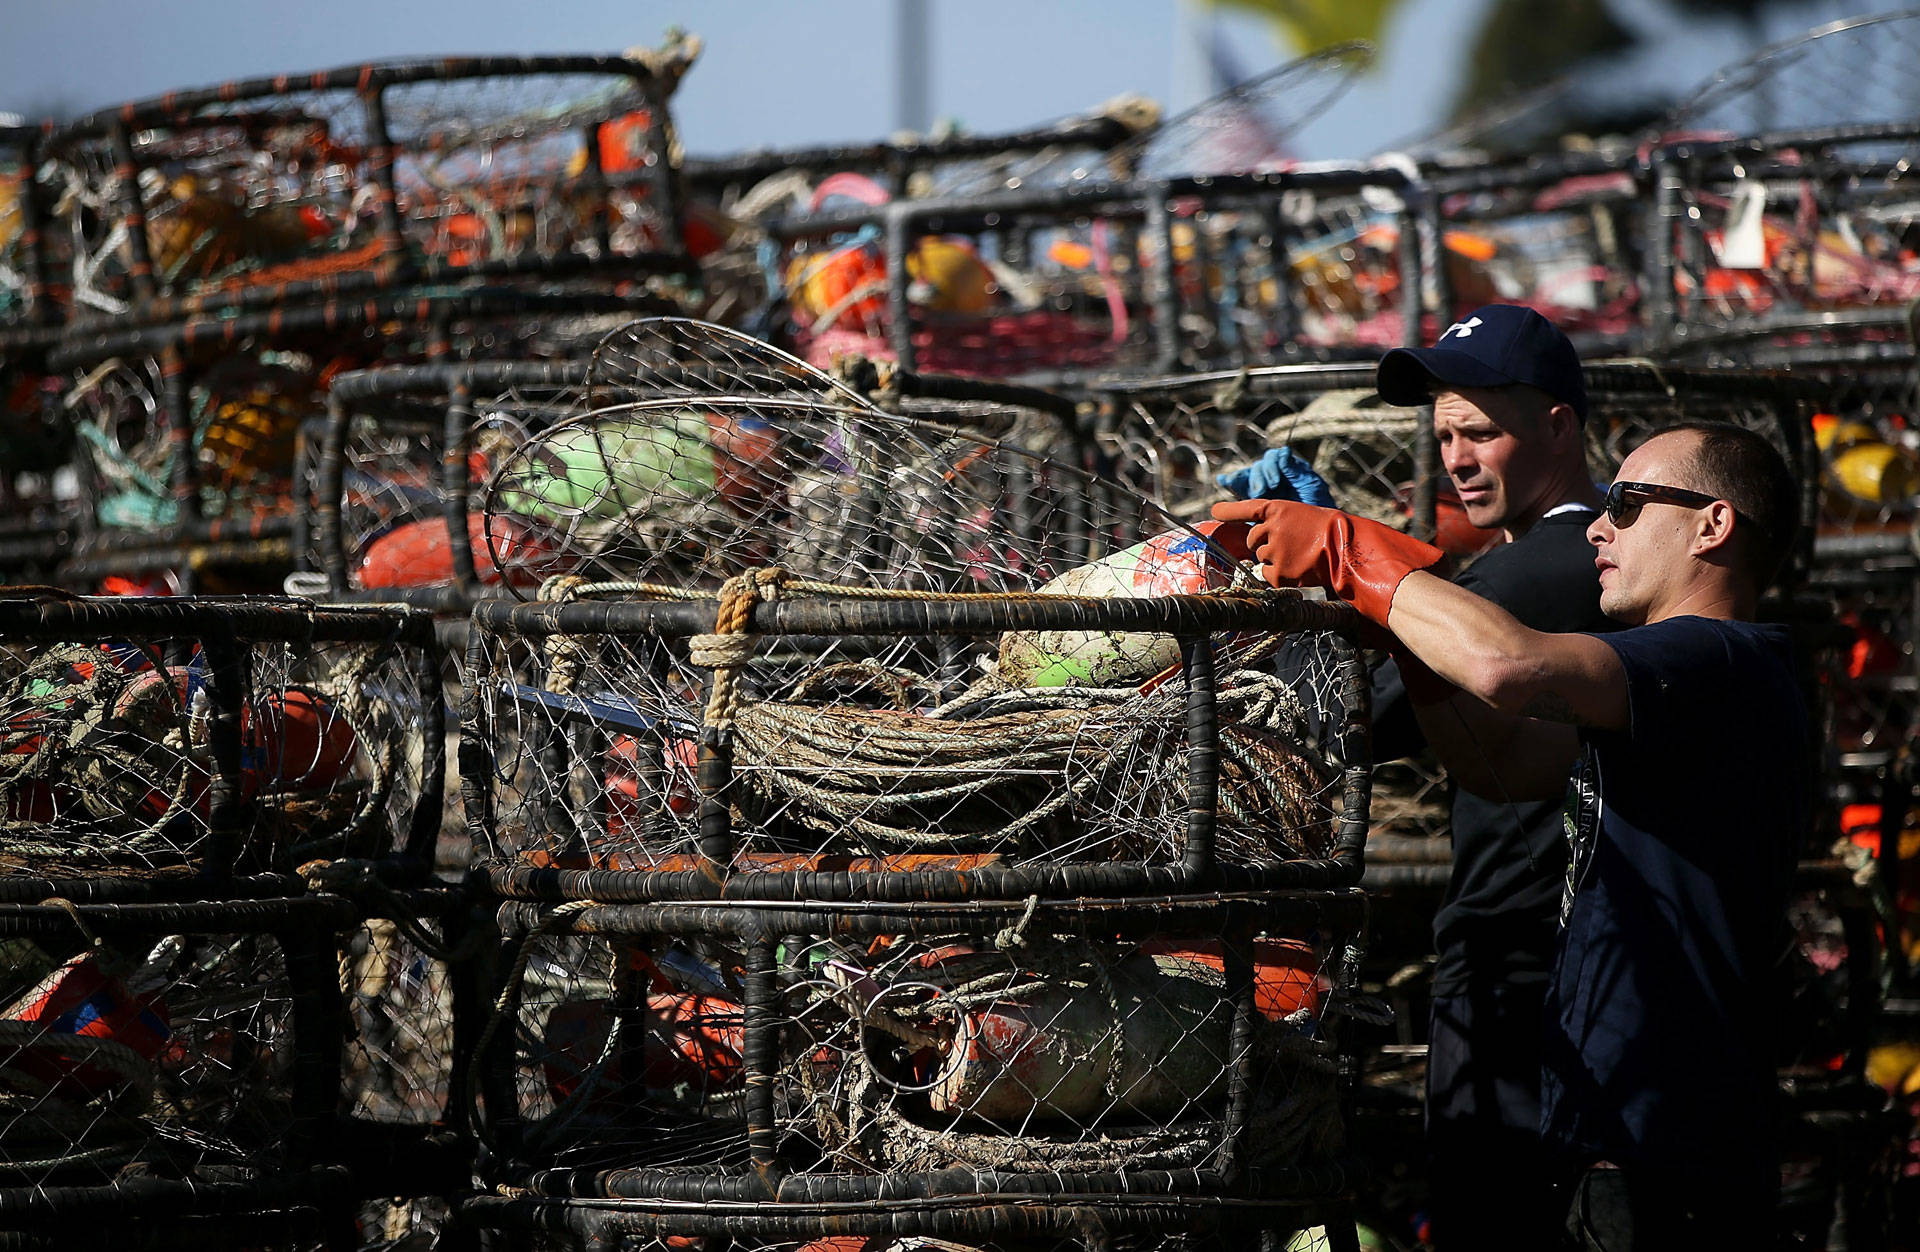 Chris Swim (R) and Nick White repair crab traps in Half Moon Bay. Justin Sullivan/Getty Images